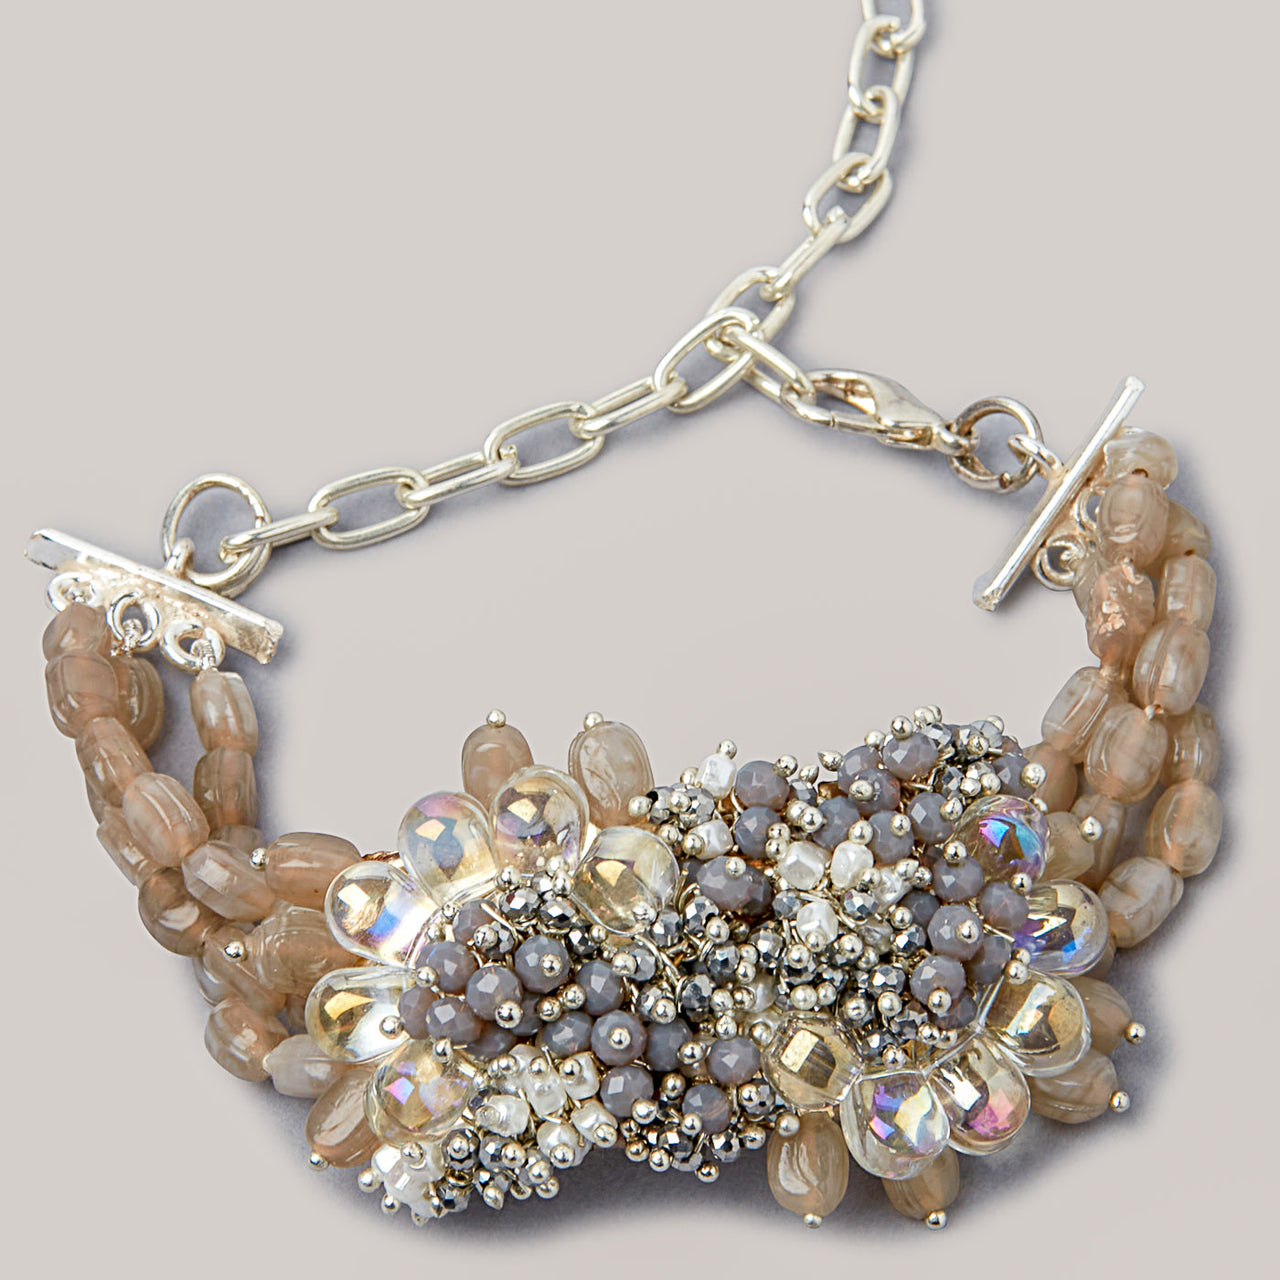 DORO - Silver Plated Metallic Bracelet With Stones And Pearls - Meraki Lifestyle Store